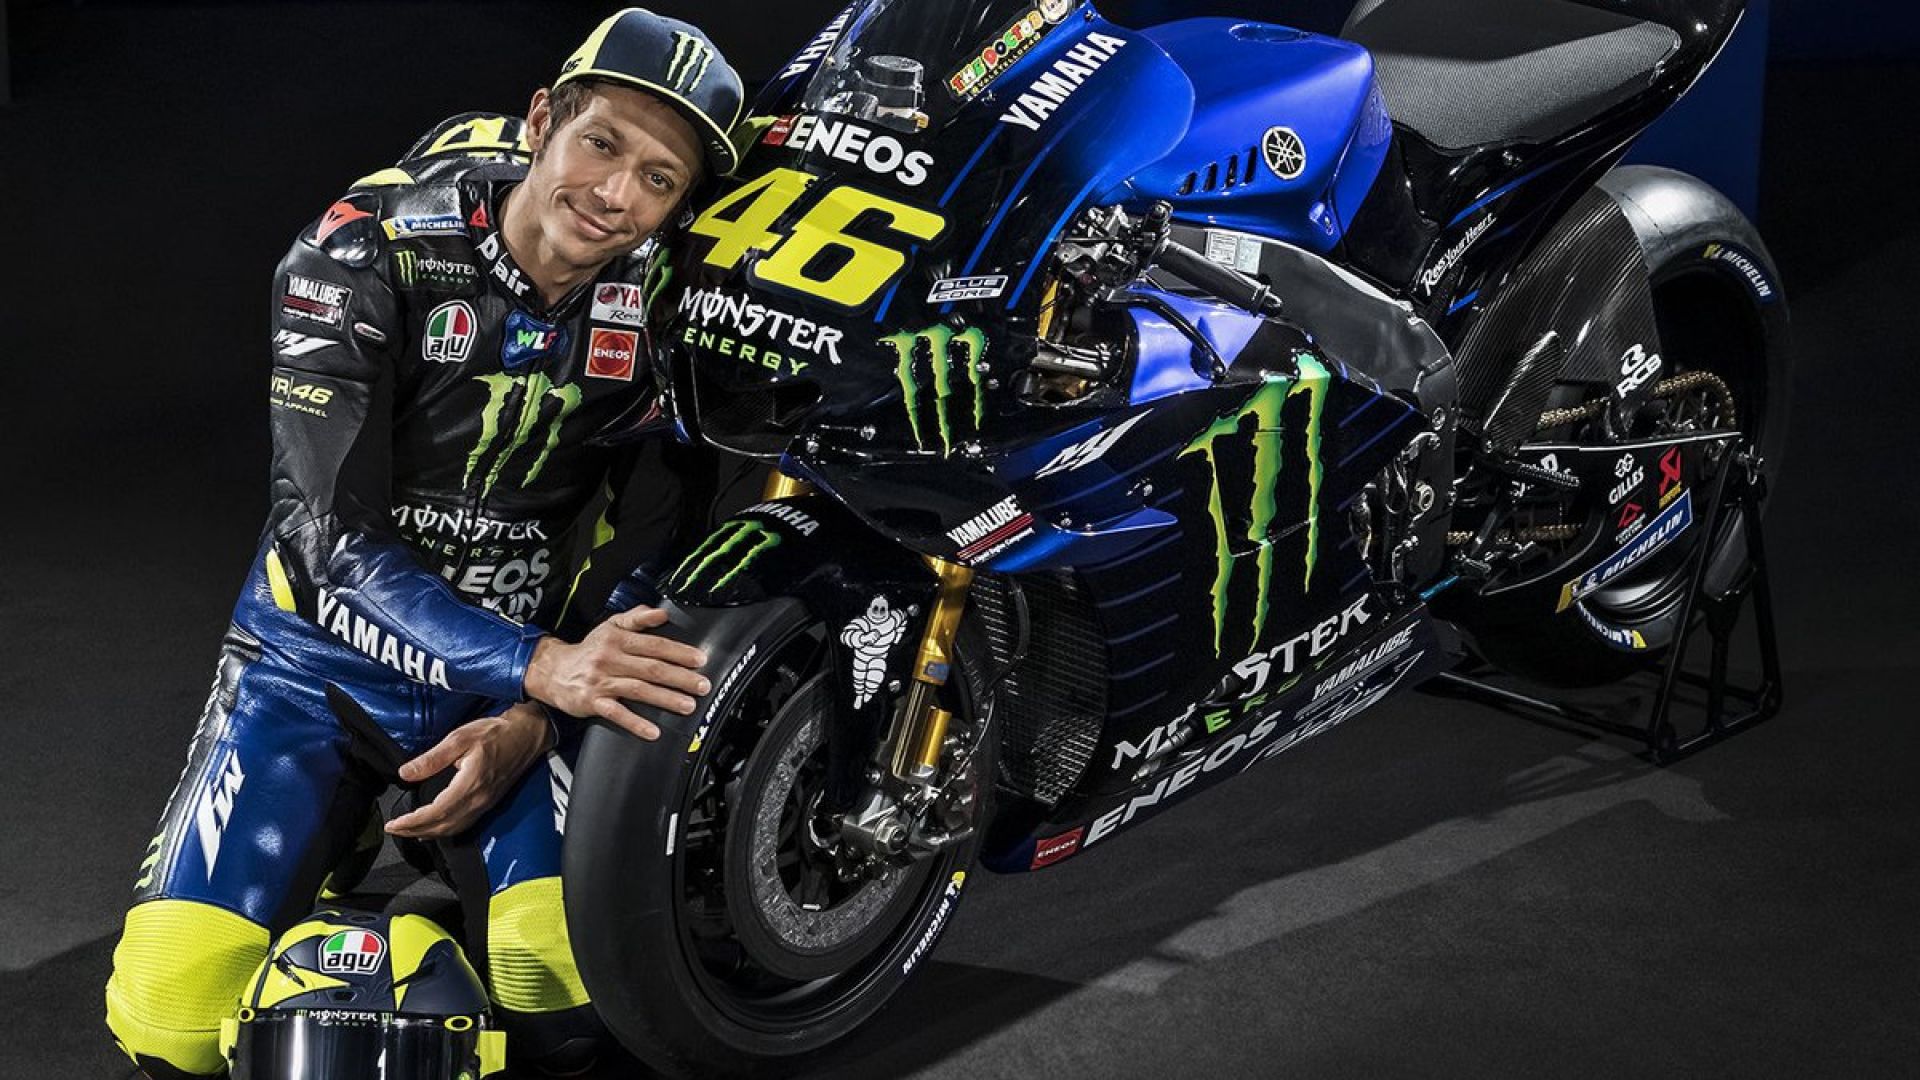 MotoGP 2019, presentanta la Yamaha M1 di Rossi: video, gallery e